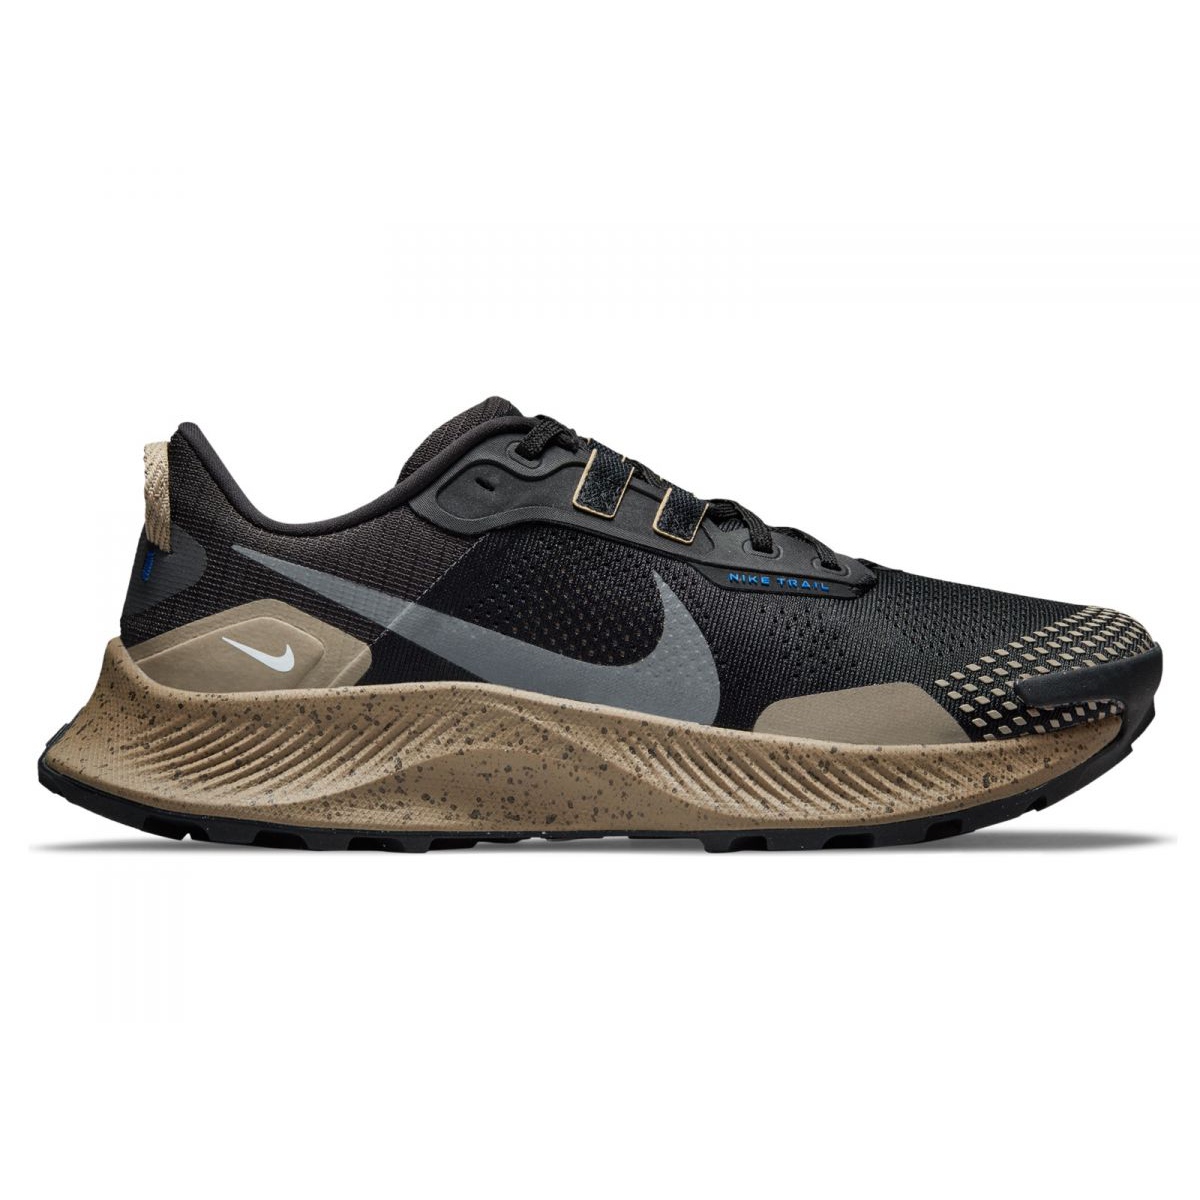 Merrell Trail Glove 7 M shoes J037151 black - KeeShoes